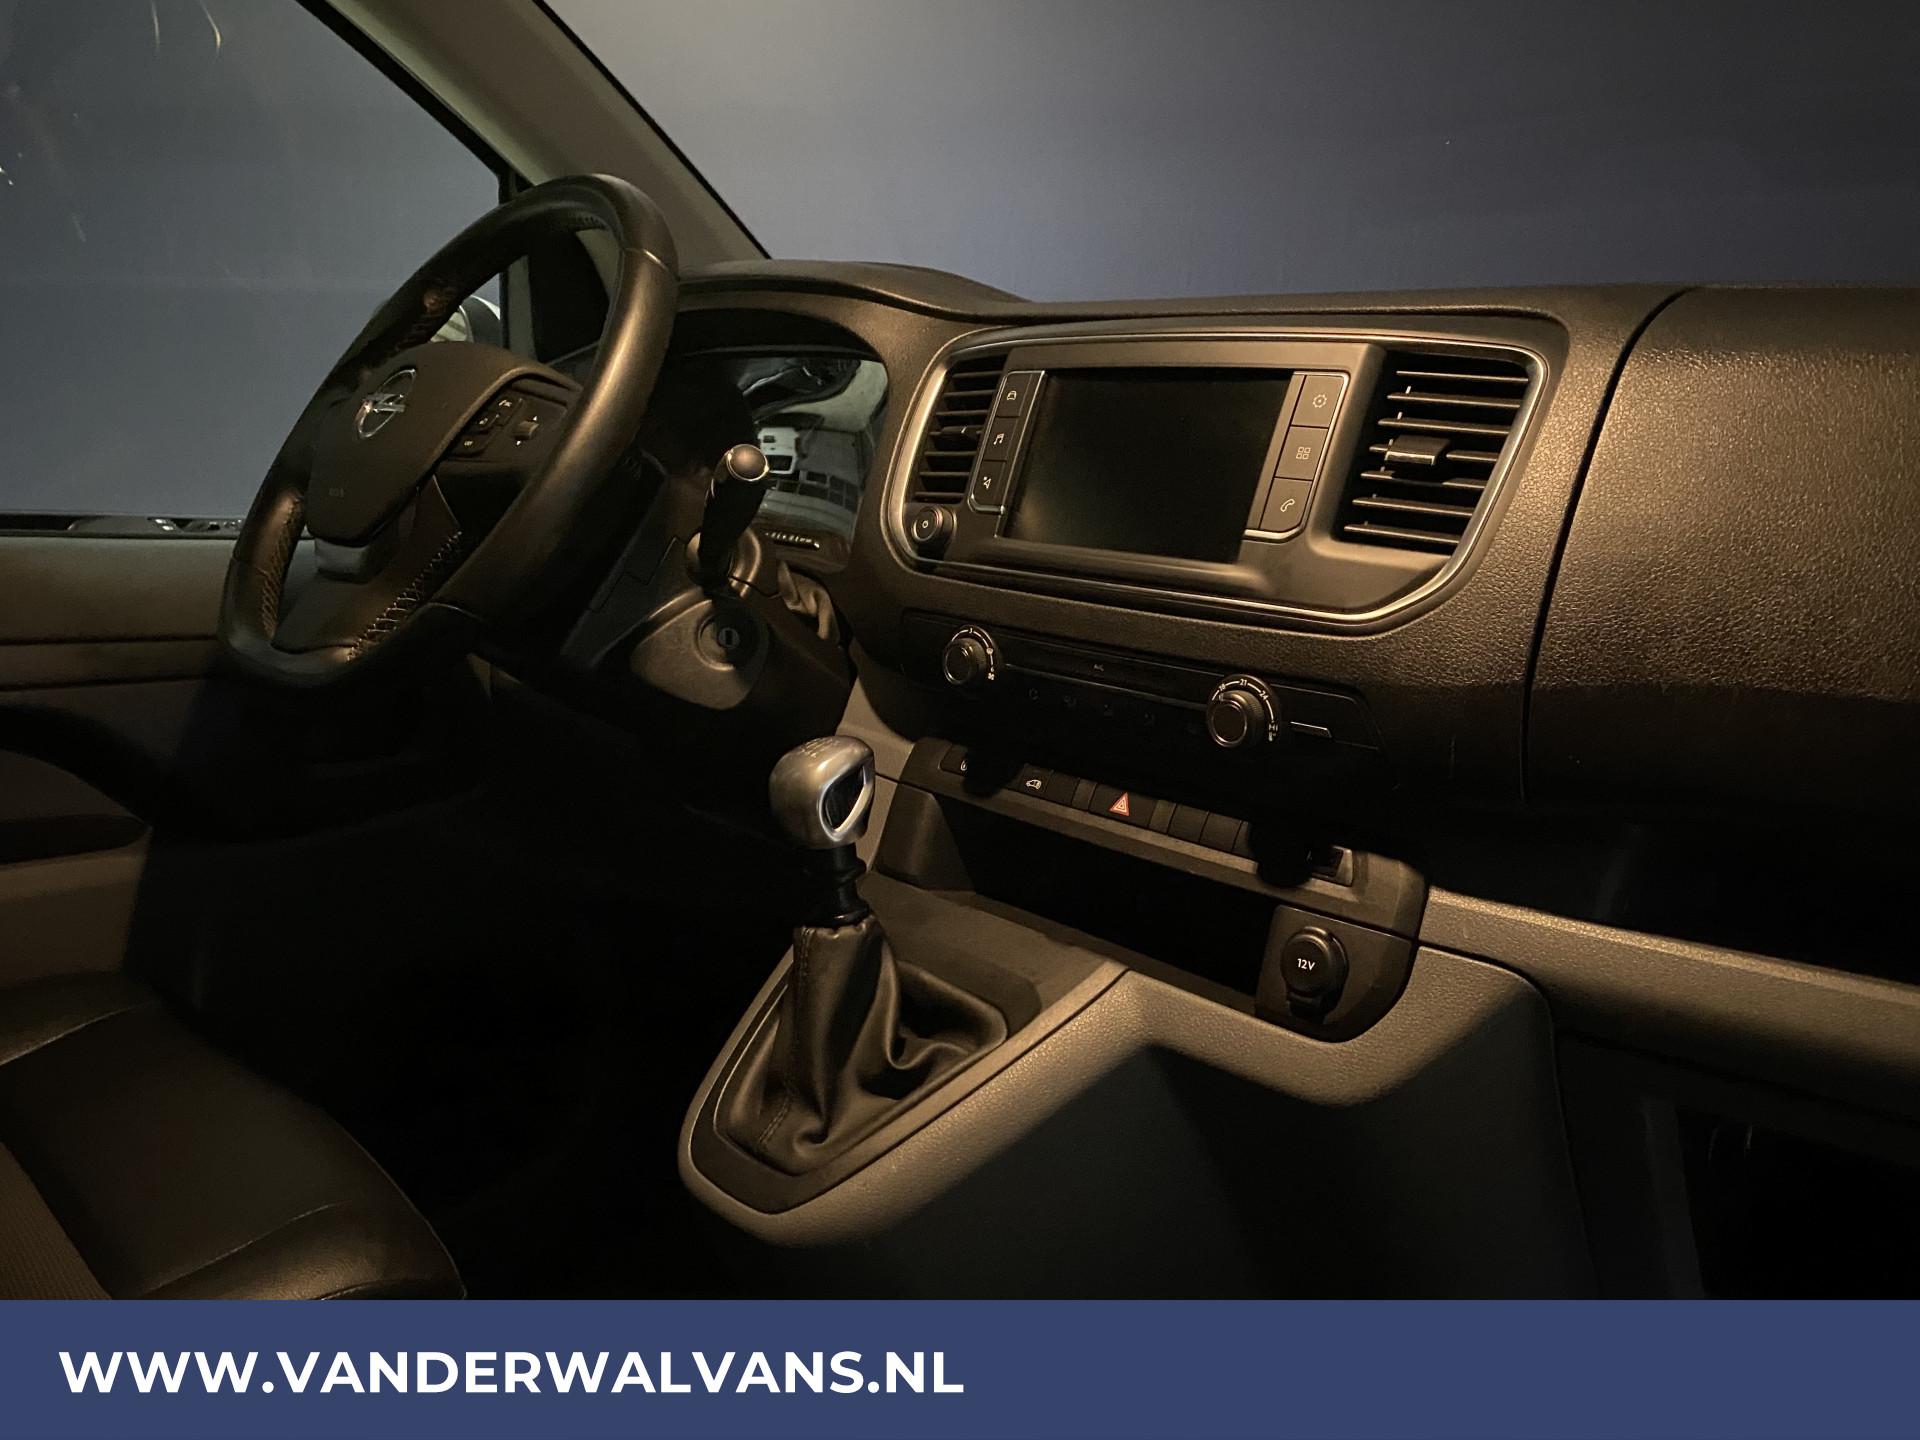 Foto 15 van Opel Vivaro 2.0 CDTI 120pk L2H1 Euro6 Airco | Bumpers in kleur | Navigatie | 2500kg trekhaak